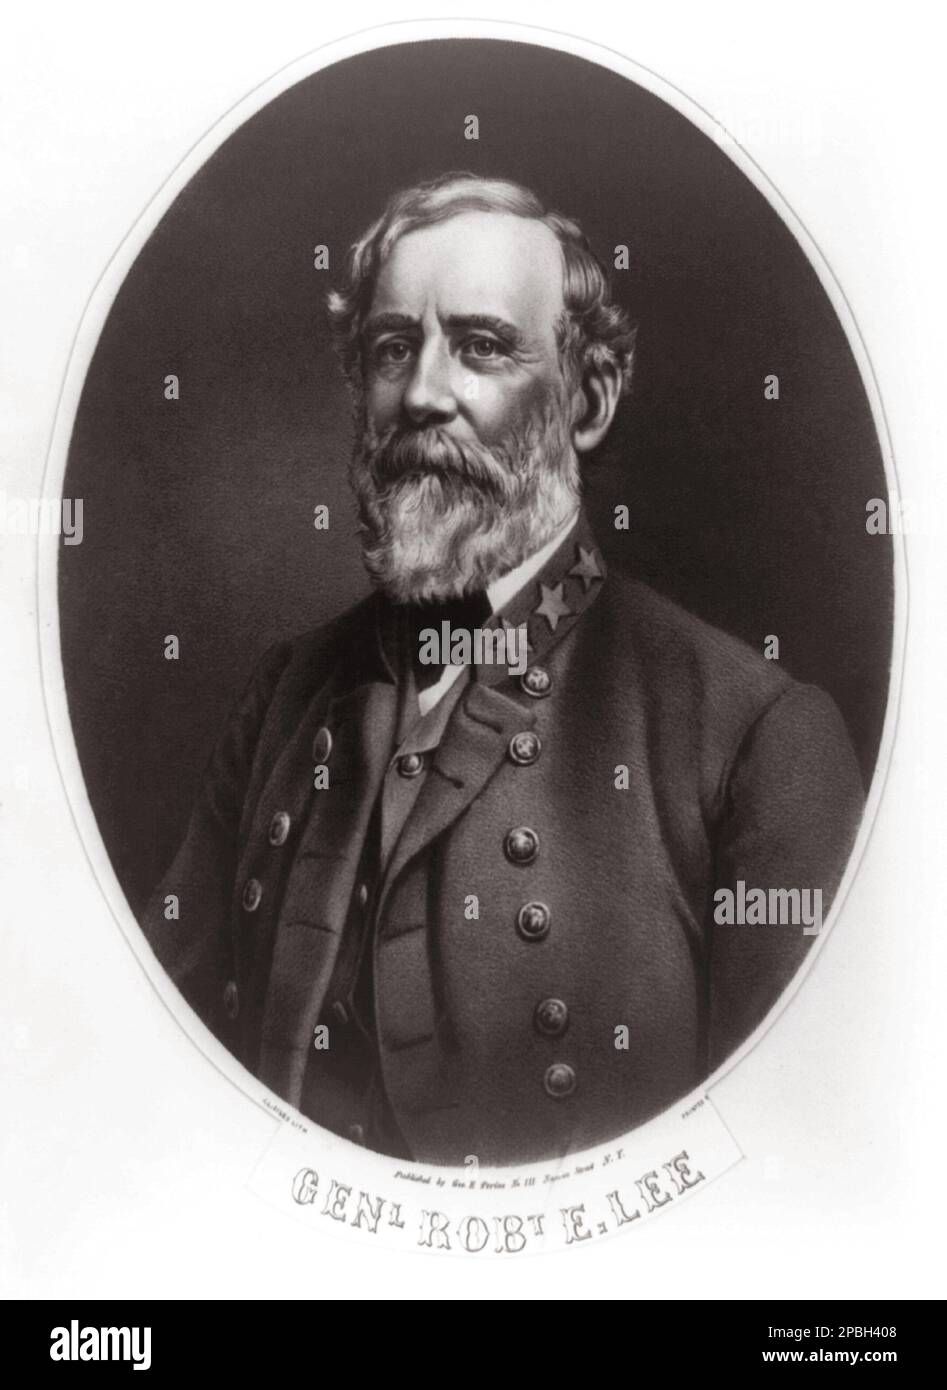 The  General ROBERT E. LEE  ( 1807 - 1870 ) of Confederate Army , lithograph portrait by J. L. (John Lawrence) Giles .   Lee was a career United States Army officer, an engineer, and among the most celebrated generals in American history.  - SECESSION WAR  CIVIL - GUERRA CIVILE DI SECESSIONE AMERICANA  - cappello - hat -  Circus - uomo anziano vecchio - older man  - barba bianca - white beard  - tie bow - papillon - cravatta -  - USA   - SUDISTA CONFEDERATO - CONFEDERATE - stelle - stars - military uniform - divisa uniforme militare ----  Archivio GBB Stock Photo